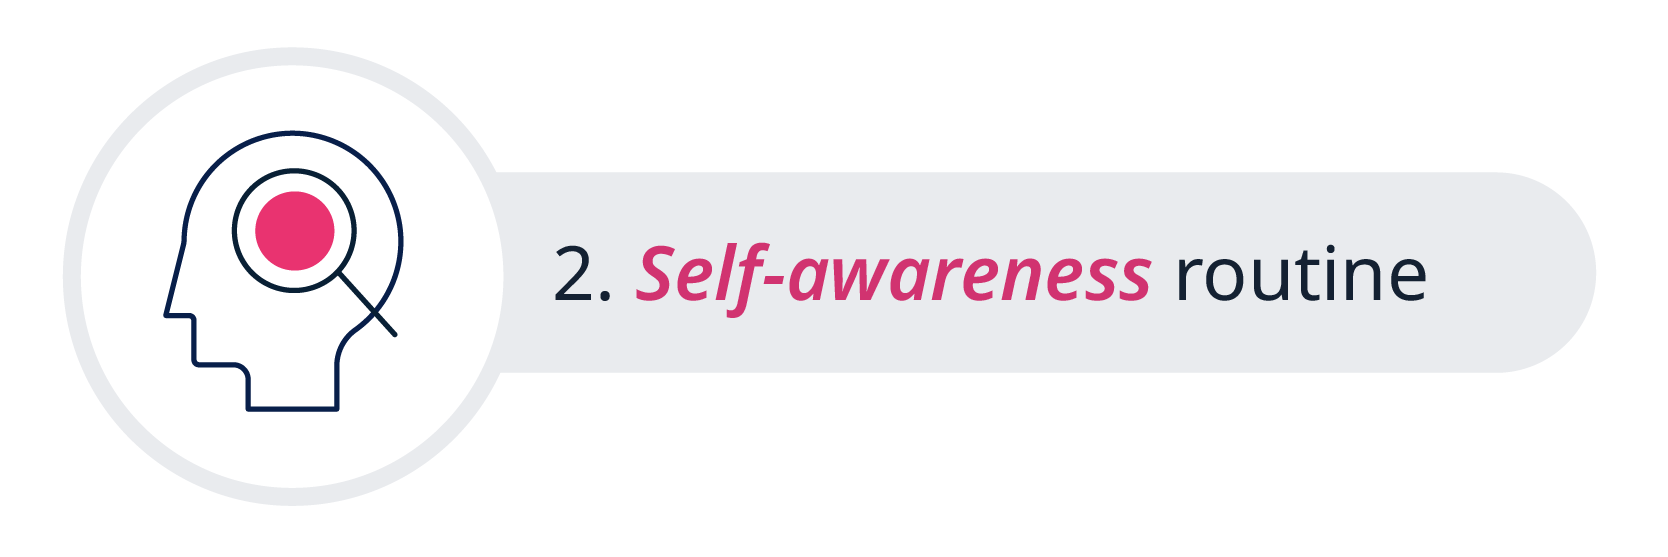 2. Self-awareness routine